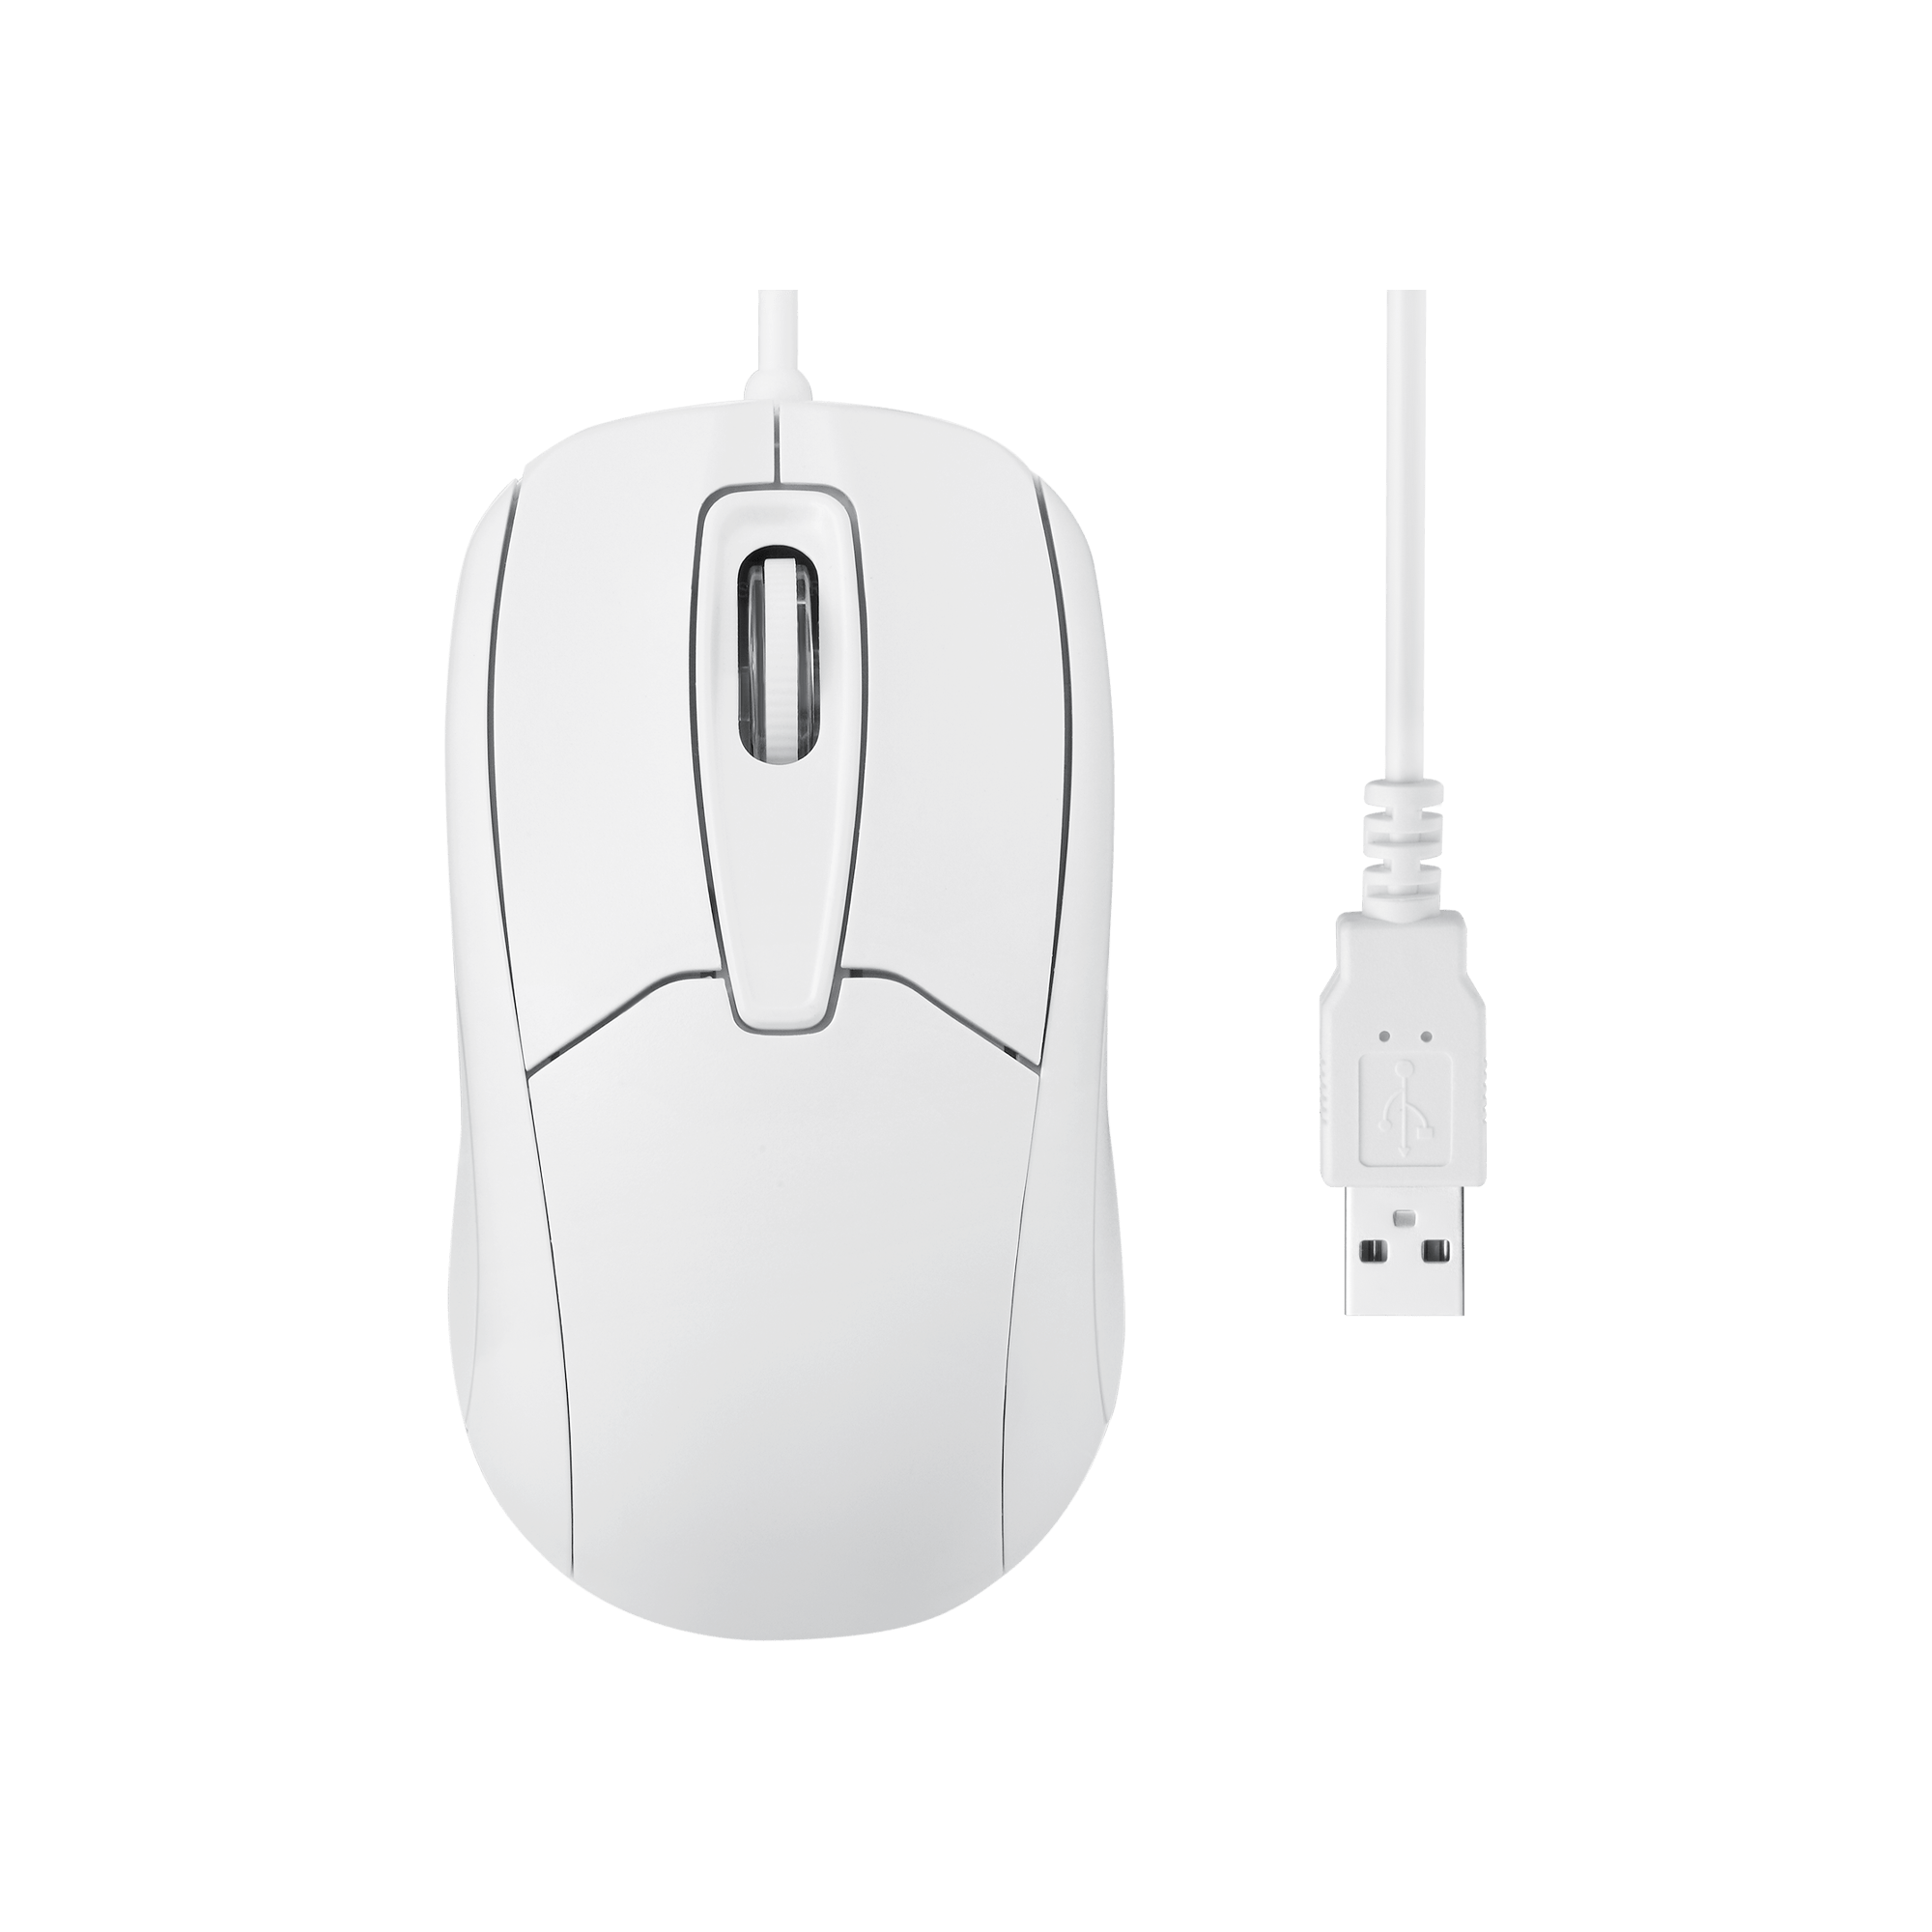 PERIMICE-209 W U - Wired White USB Mouse - Perixx Europe